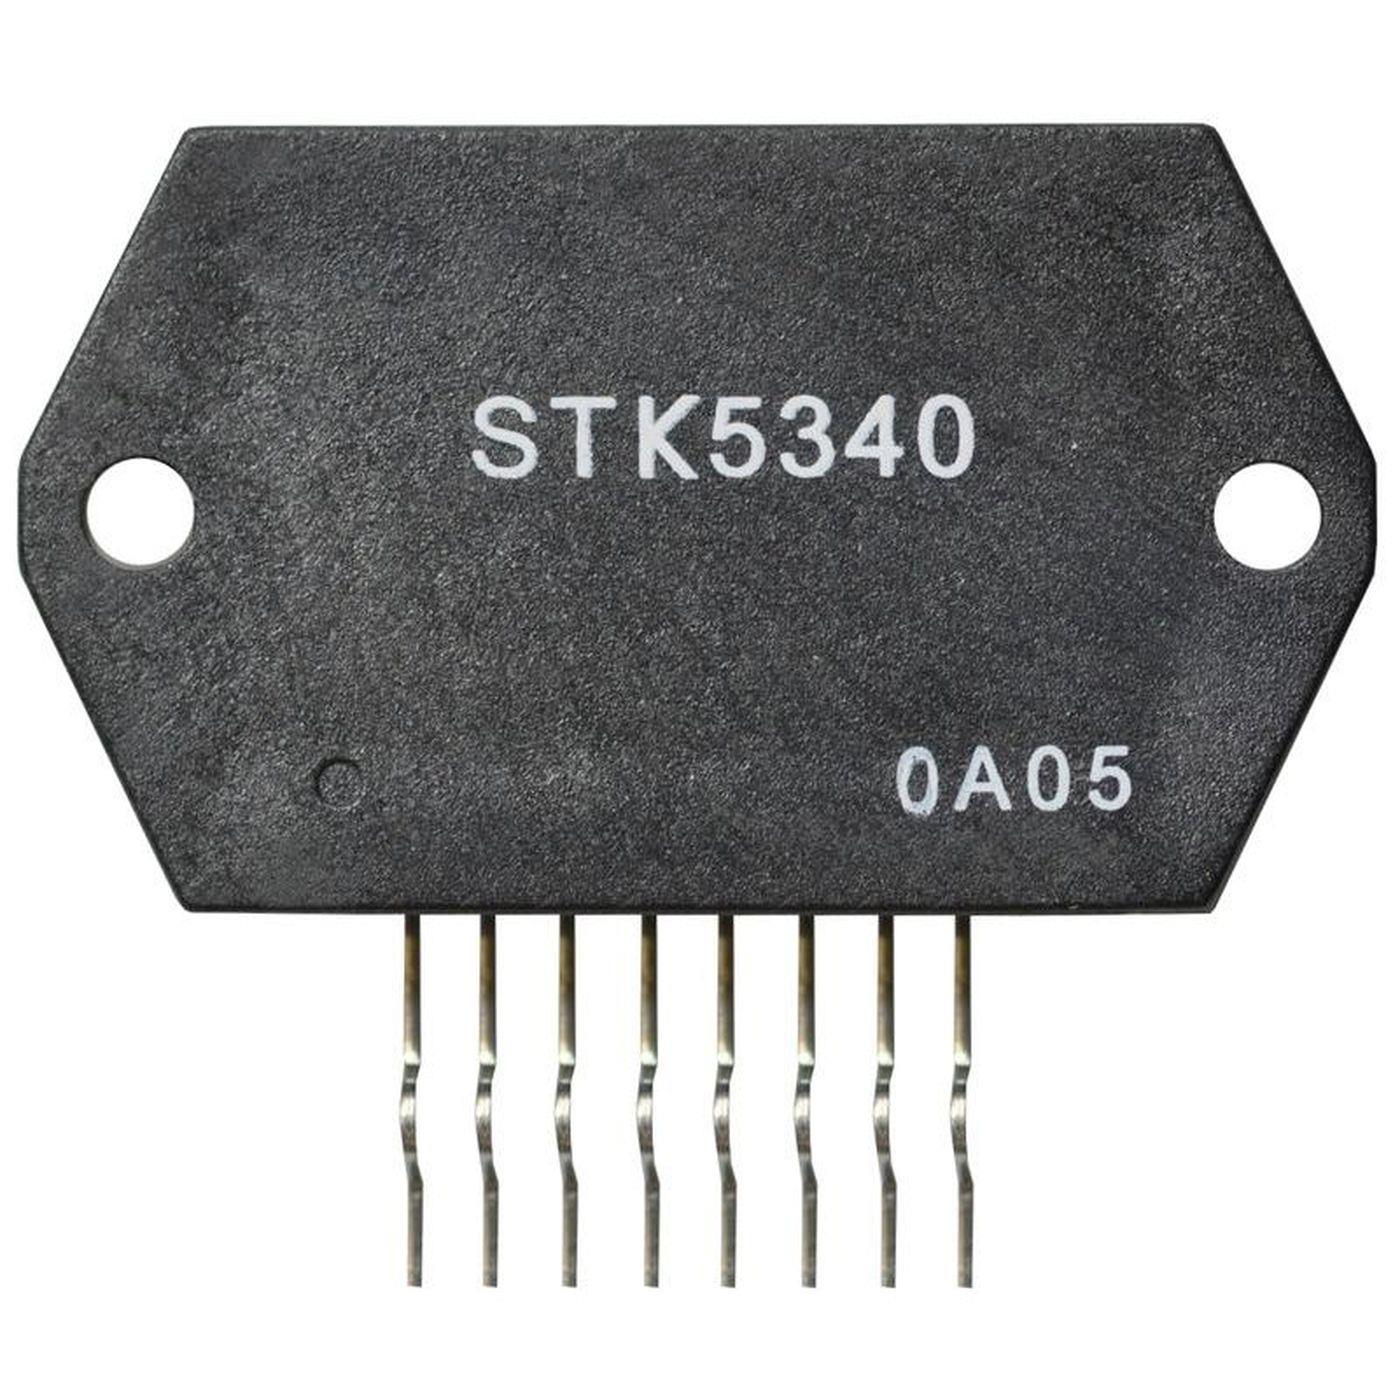 Hybrid-IC STK5340 45x25mm